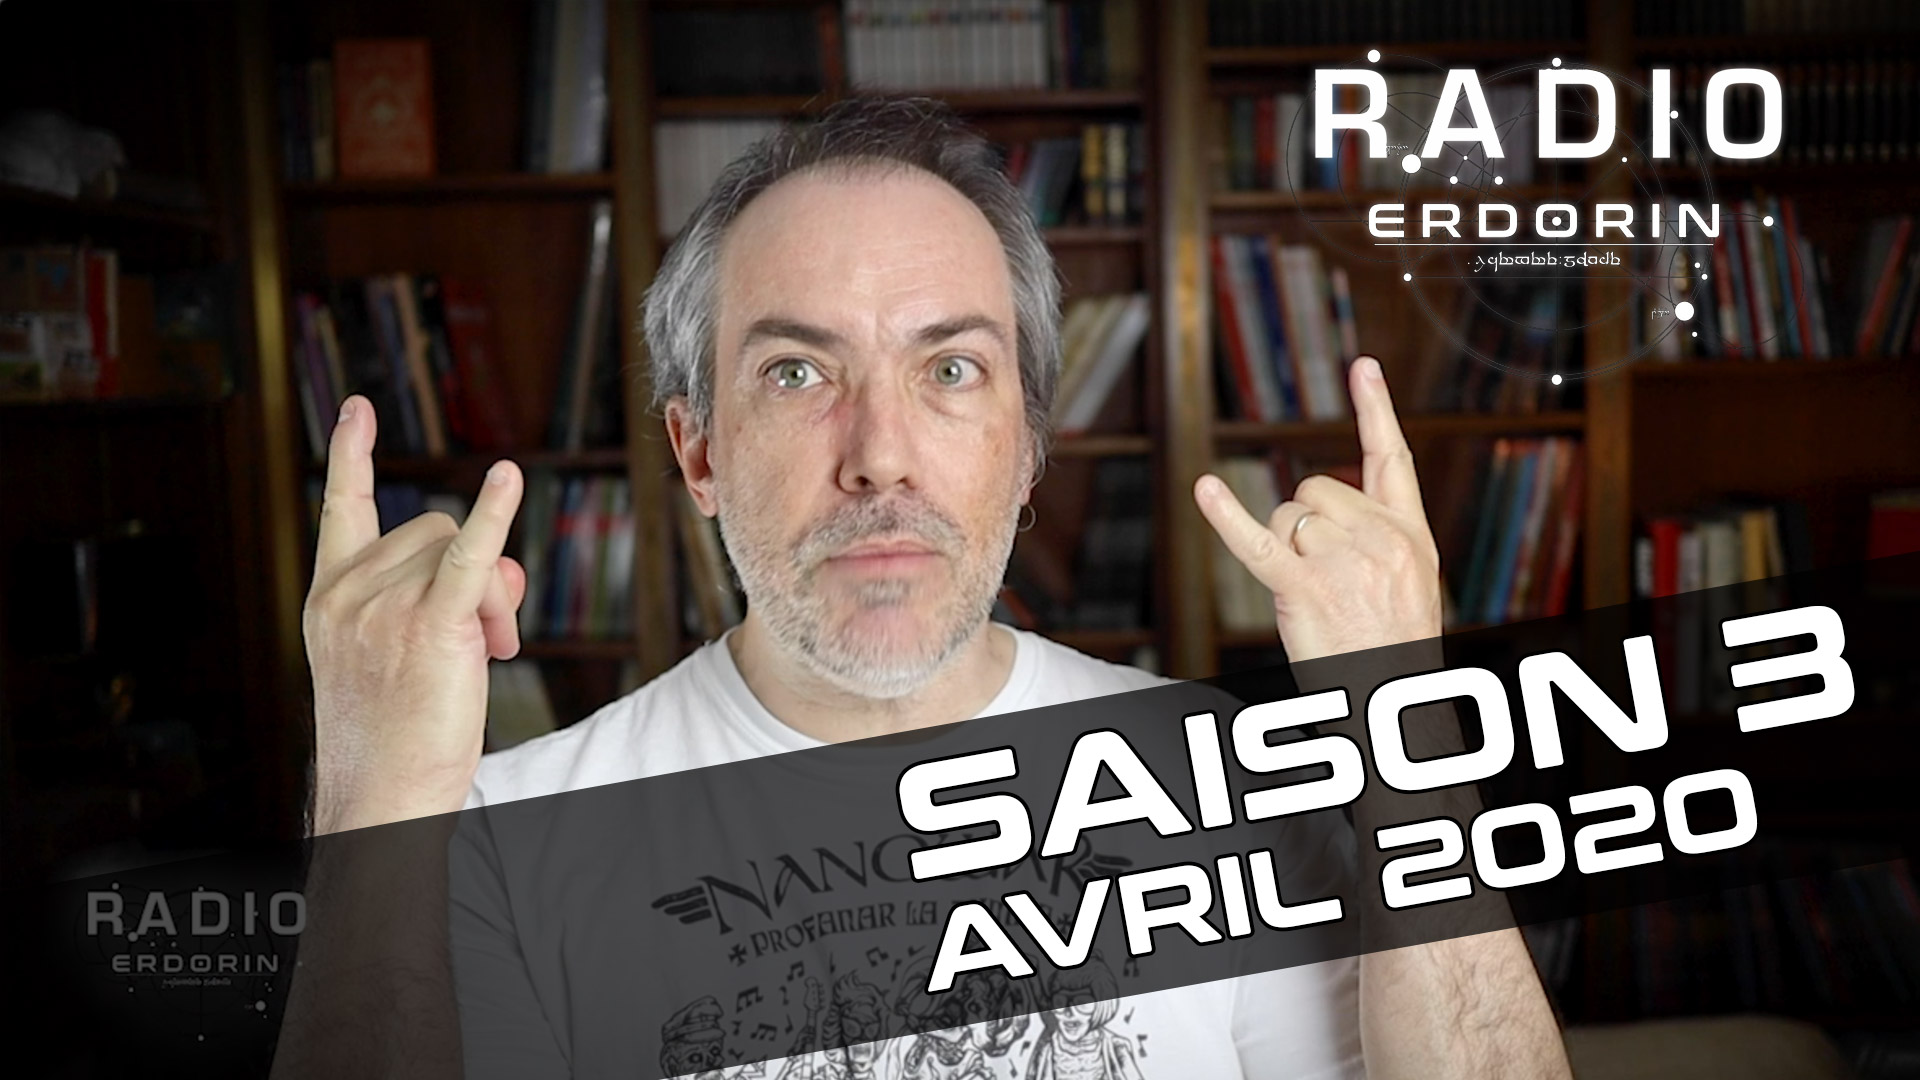 Radio-Erdorin S3E4: Avril 2020